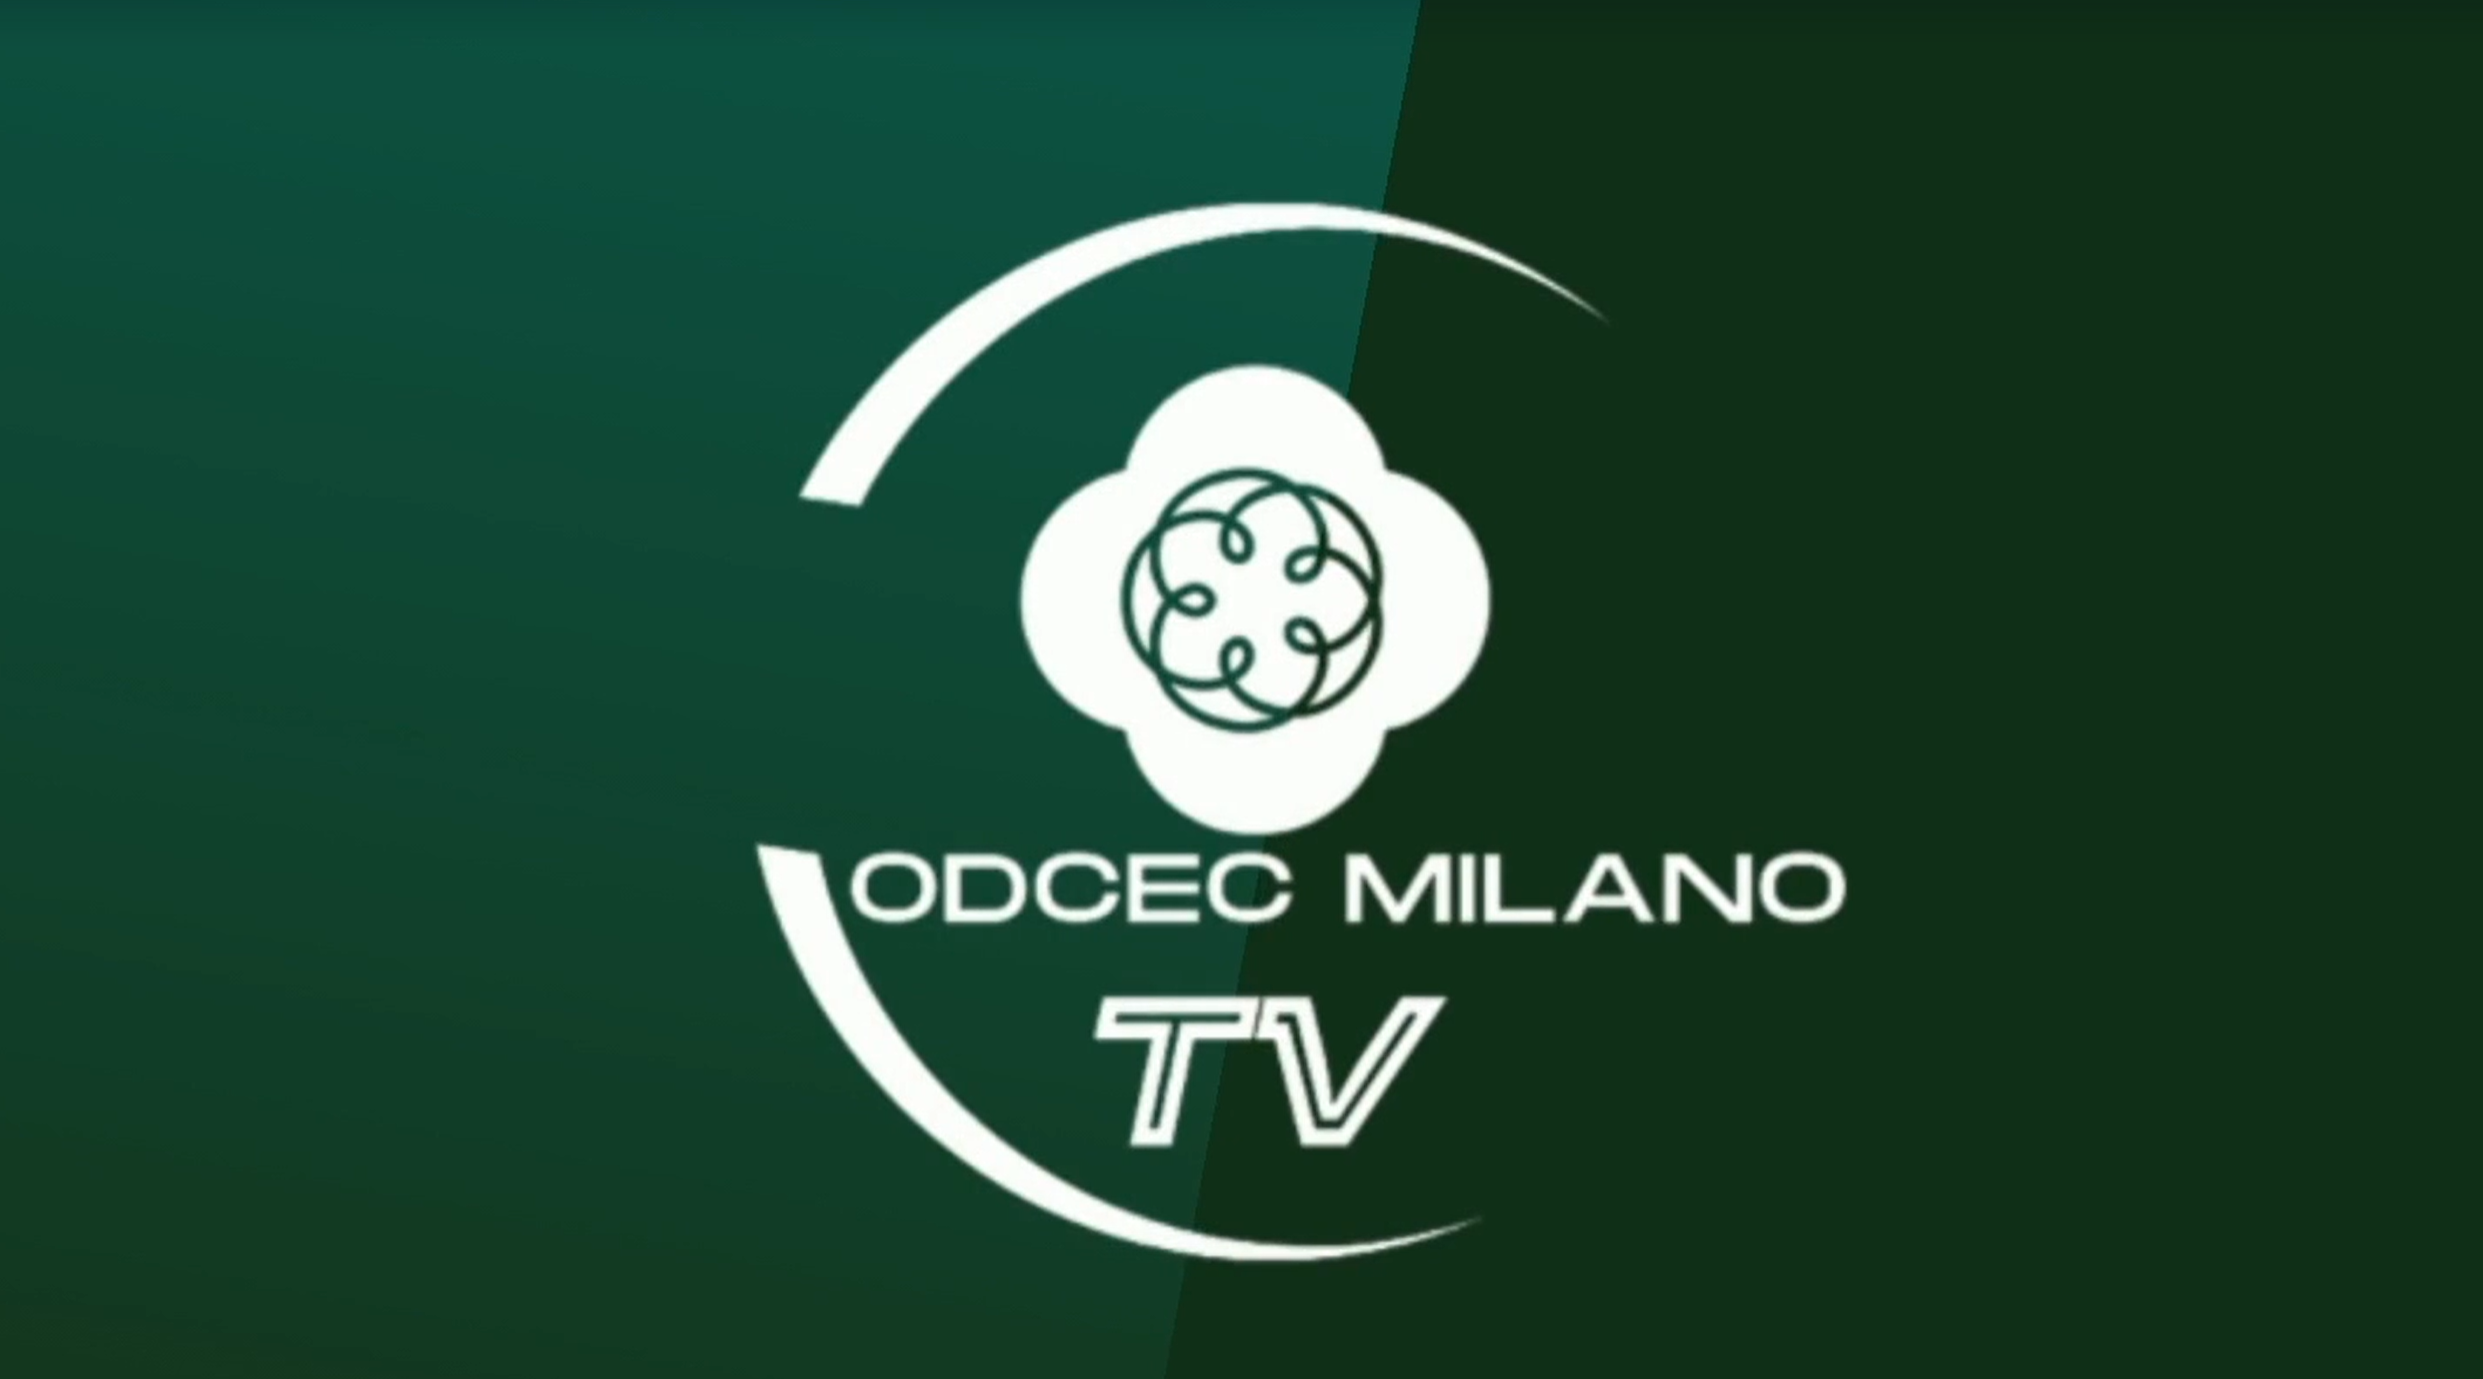 Odcec Milano TV